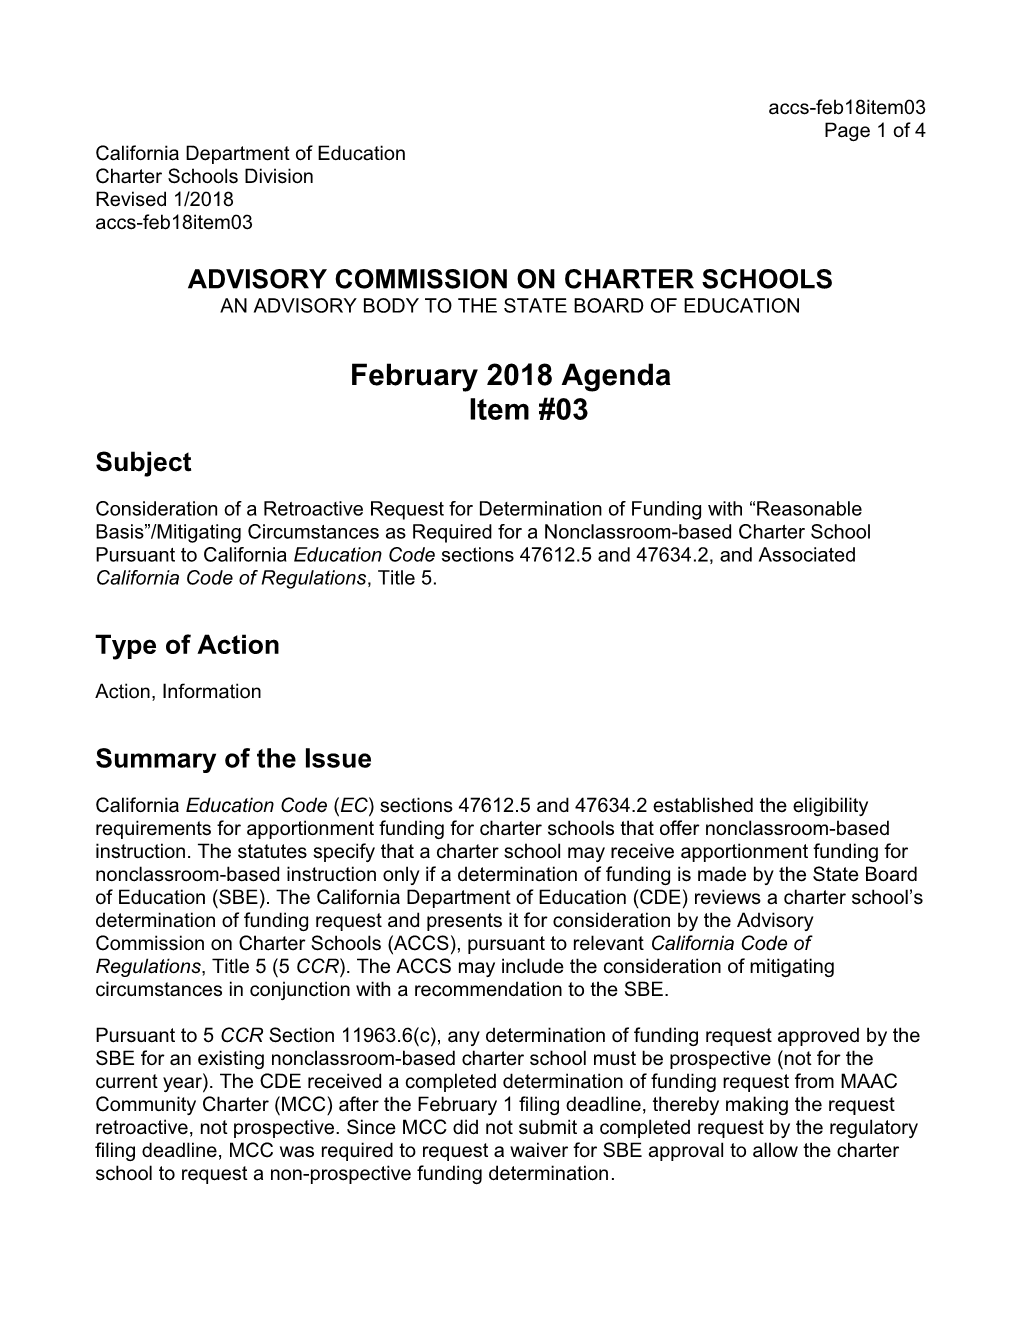 February 2018 ACCS Agenda Item 03 - Advisory Commission on Charter Schools (CA State Board